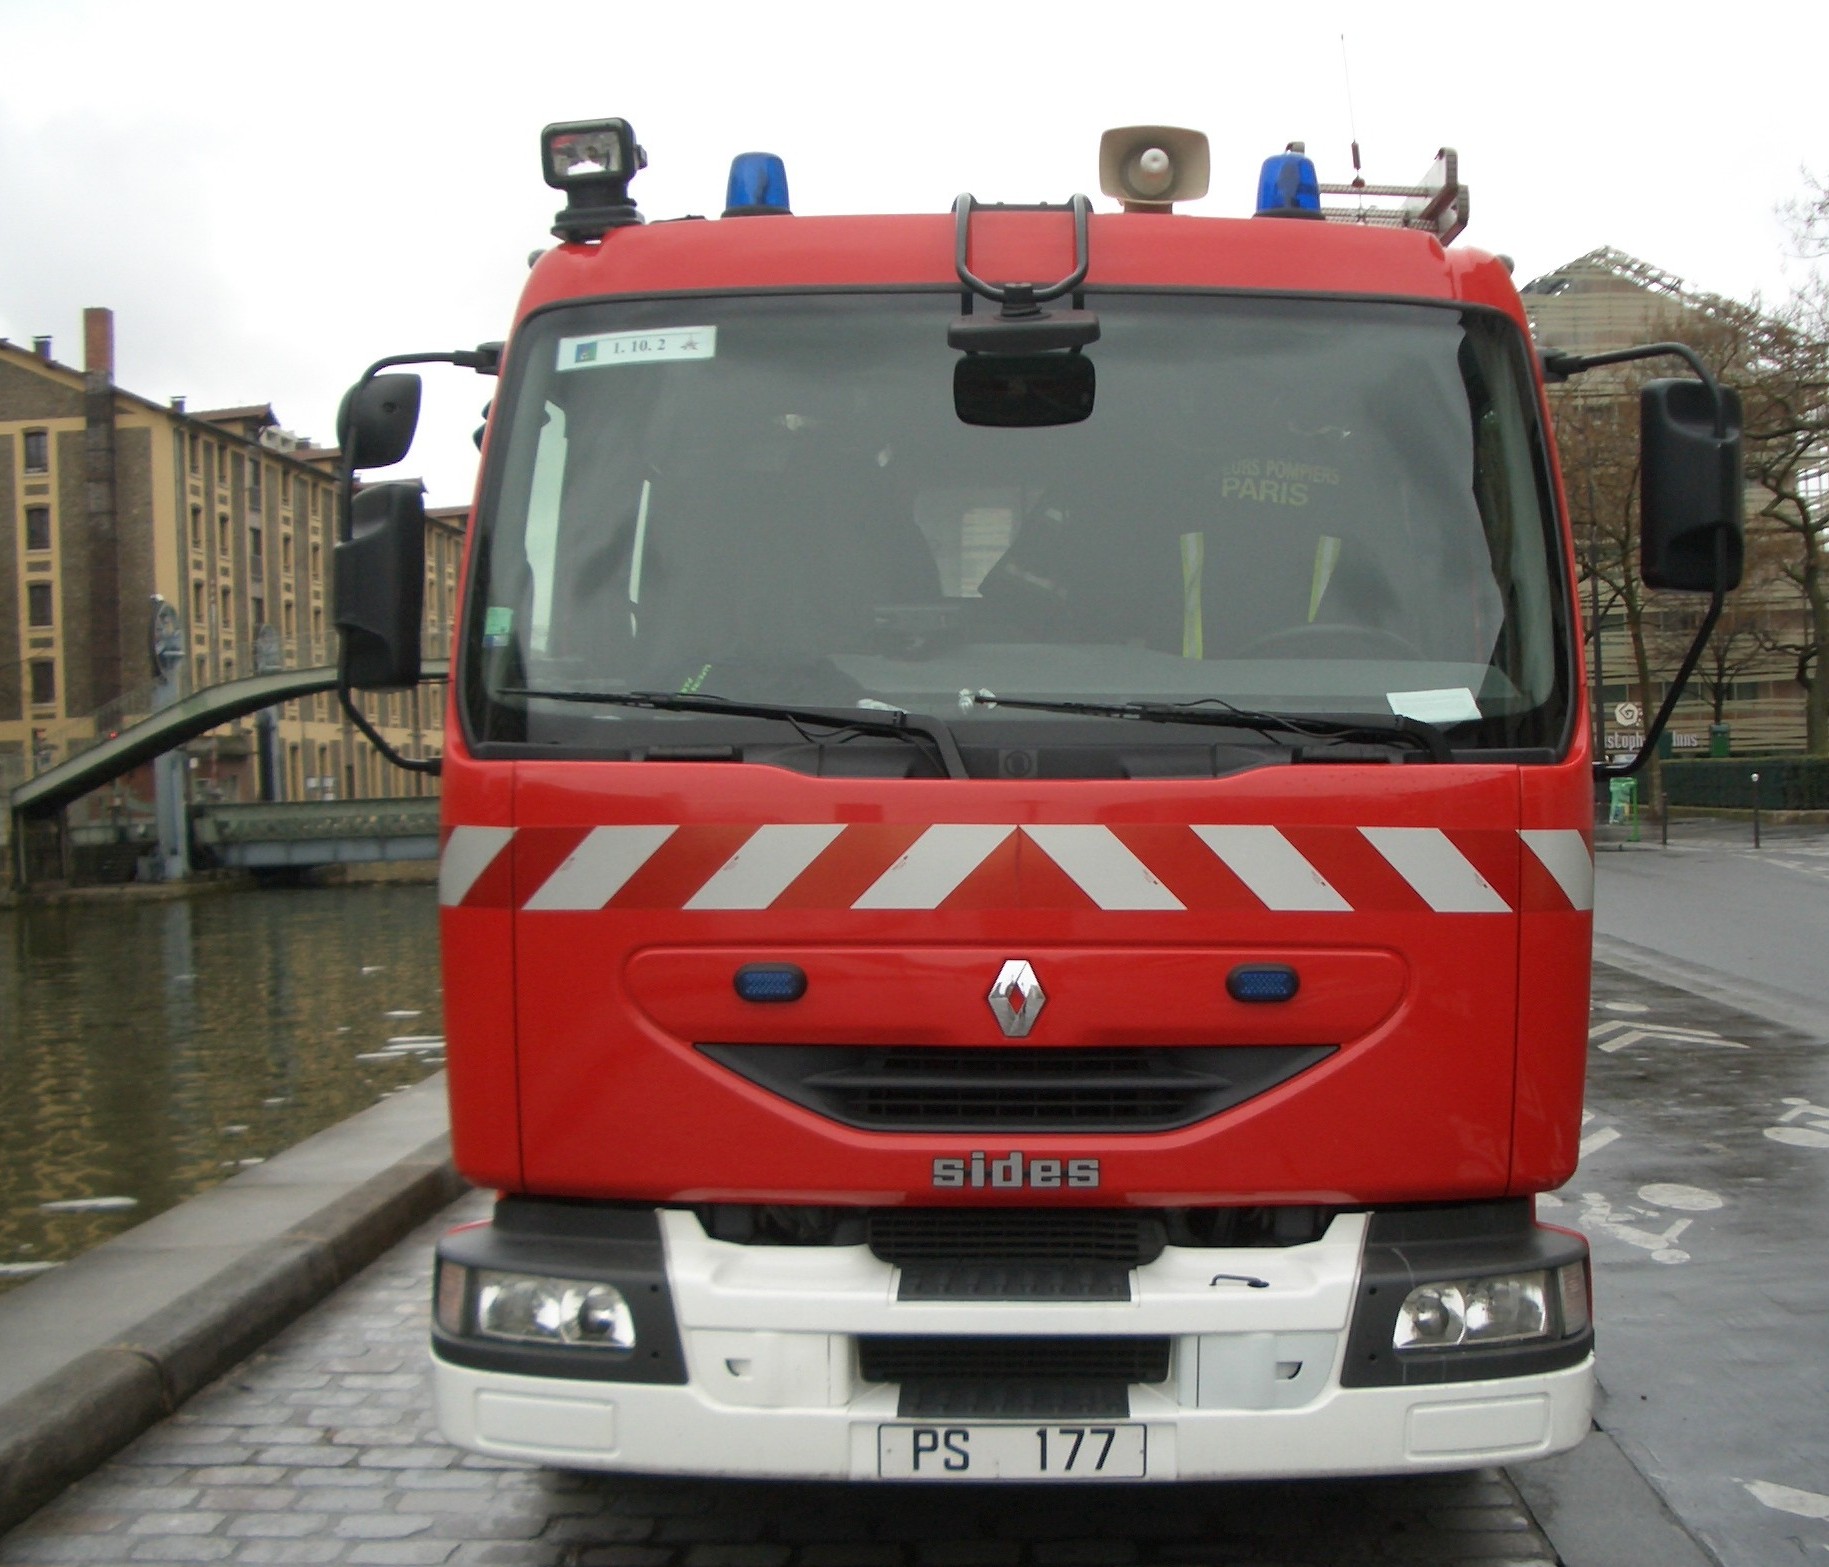 F_PS-177-Feuerwehr-Paris-1_PP